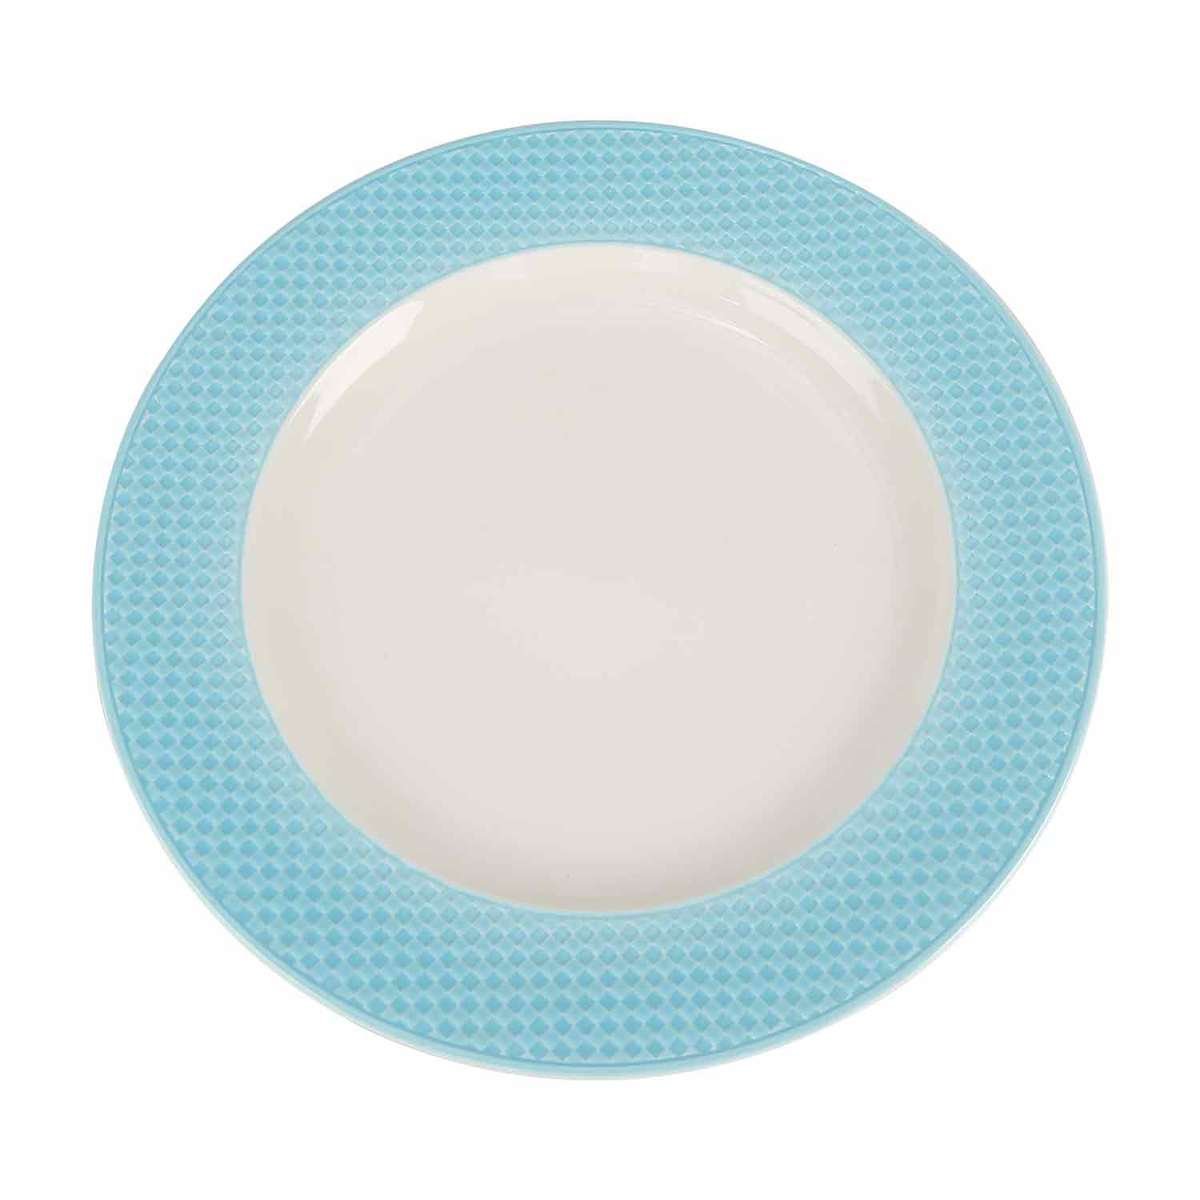 Qualitier Dinner Plate Blue 27.5cm per pc